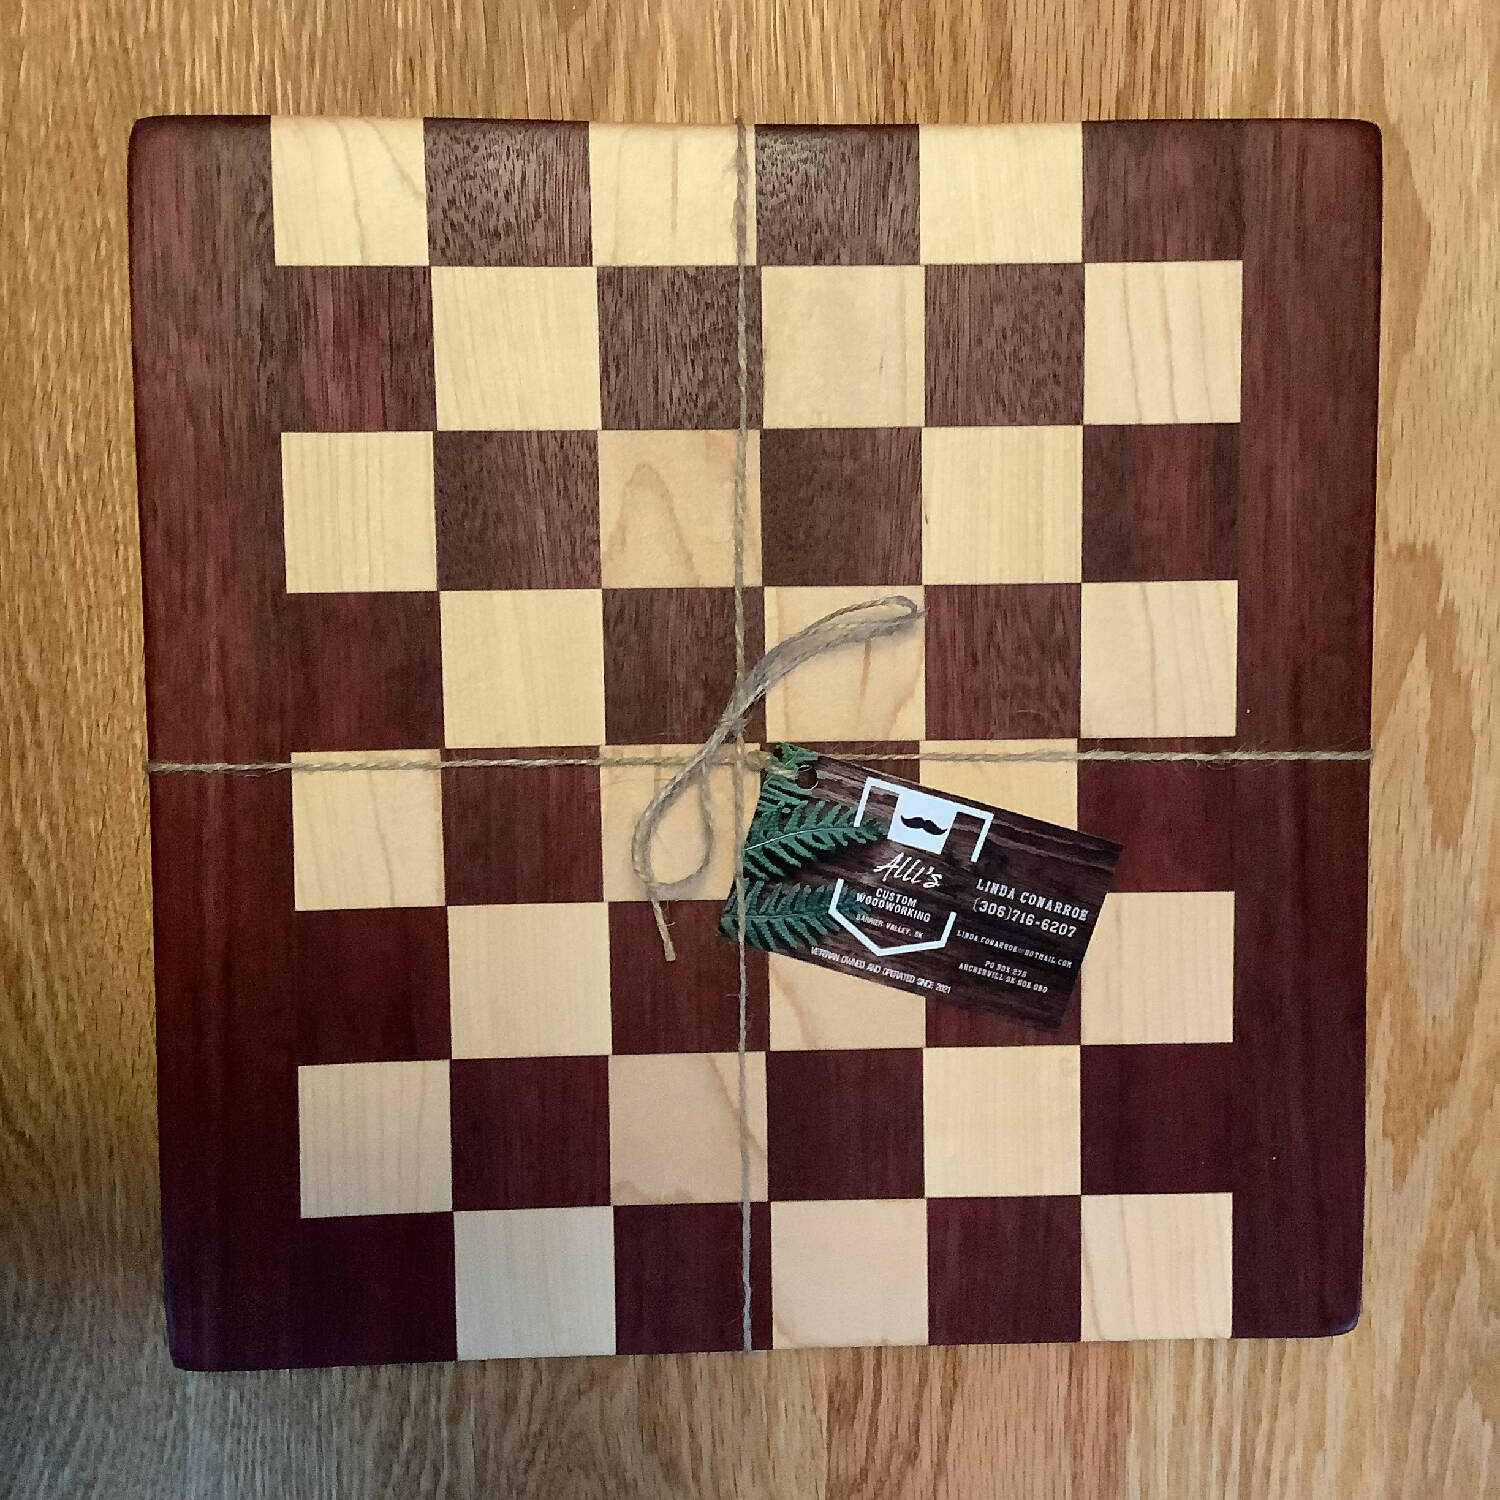 12” x 12” maple and purple heart checkerboard pattern cutting board